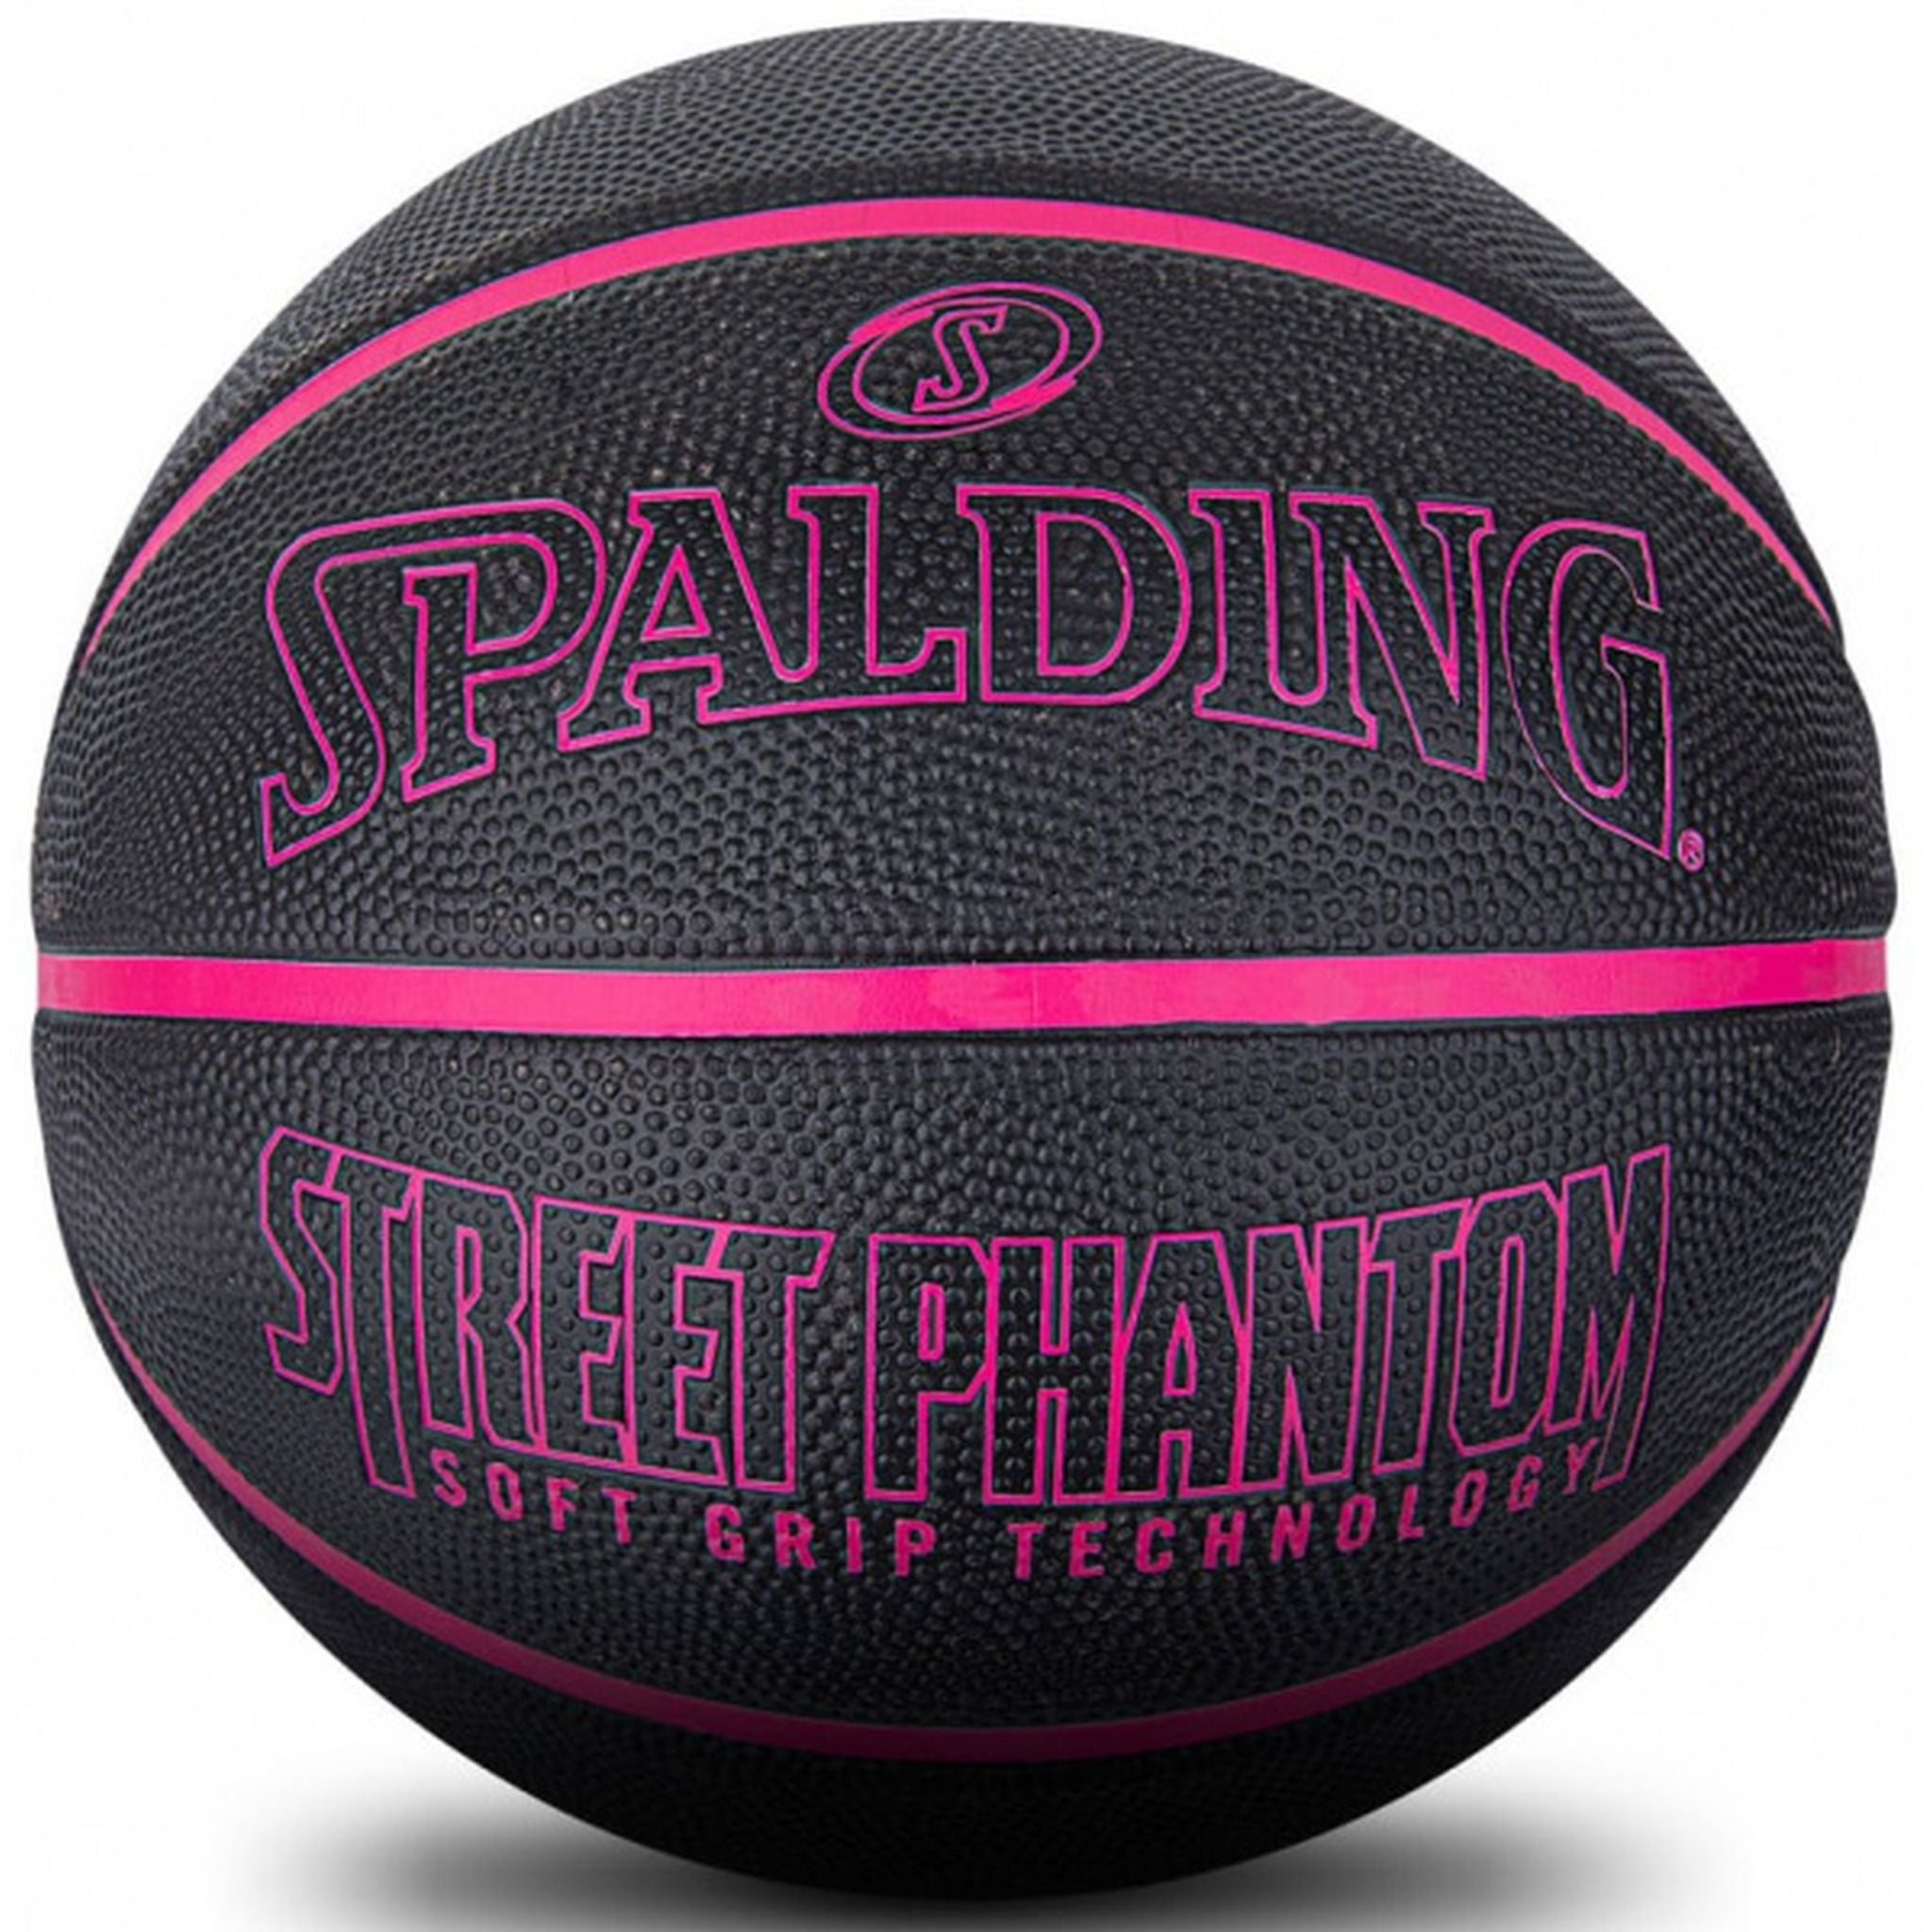 Spalding Street Phantom Basketball